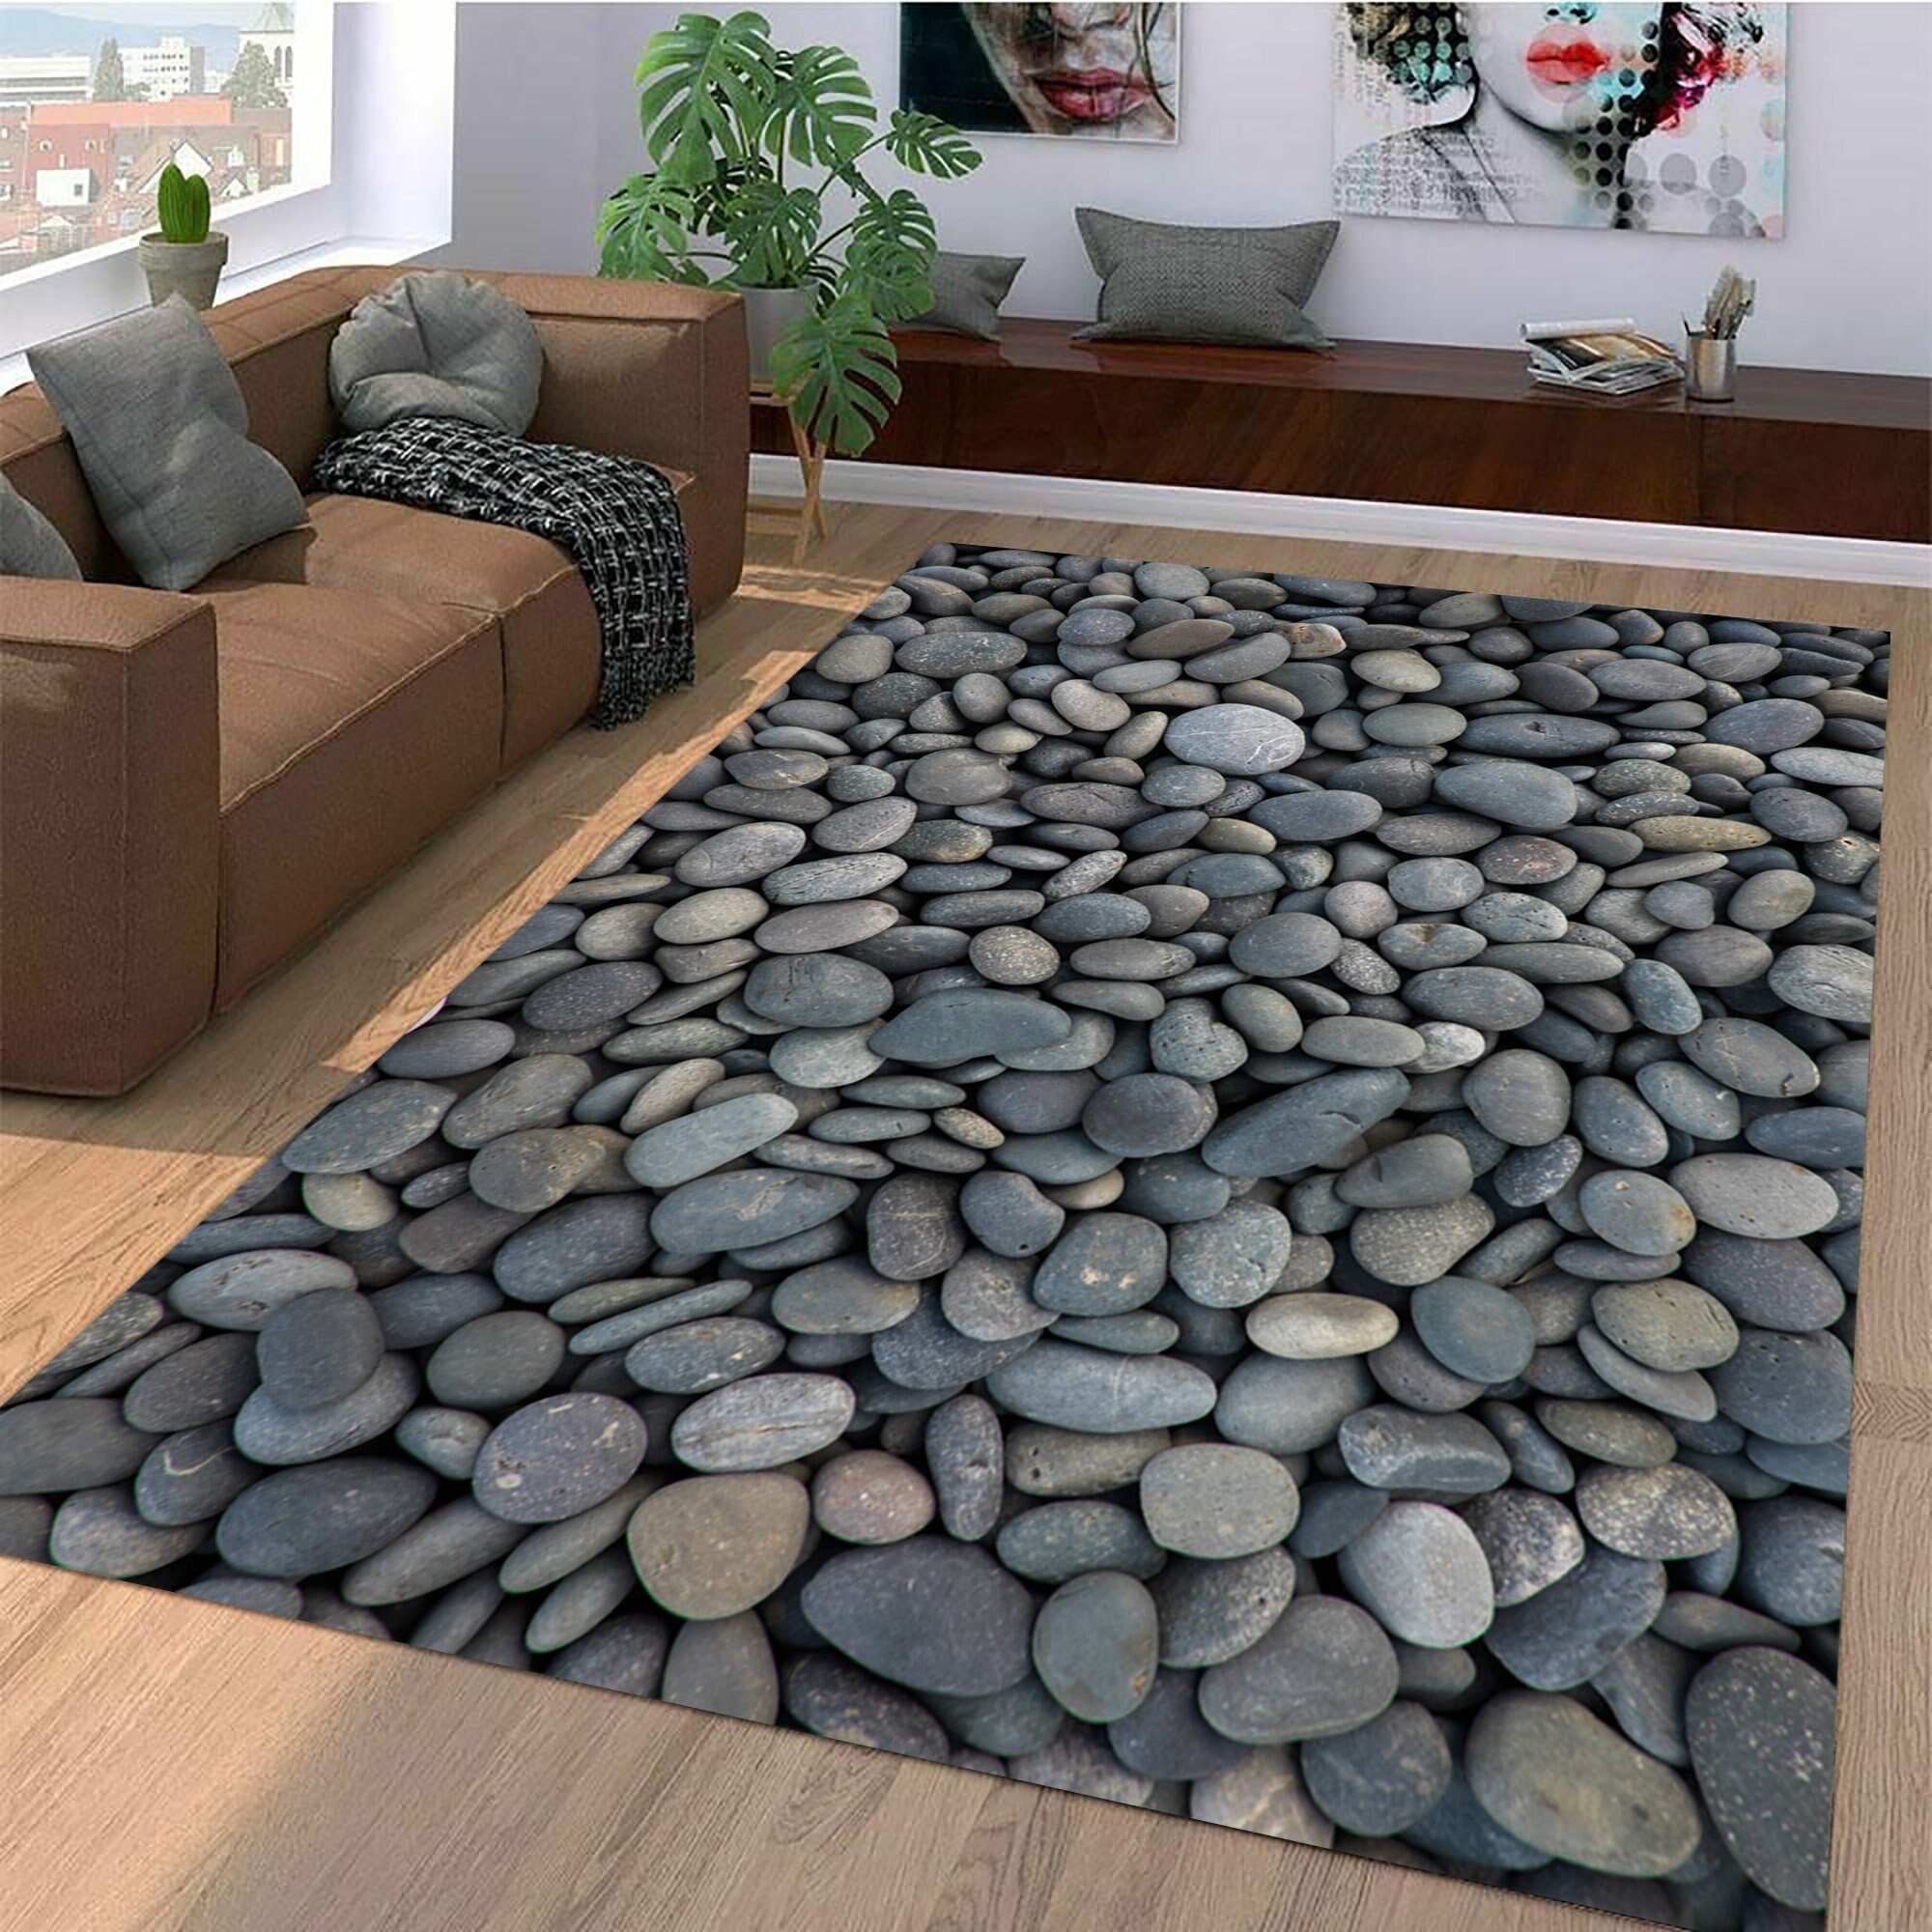 Gray River Stone Pebbles River Rock Doormat Non-slip Absorbent Bathroom Floor  Mats Home Entrance Rugs Kitchen Carpet Footpad - AliExpress